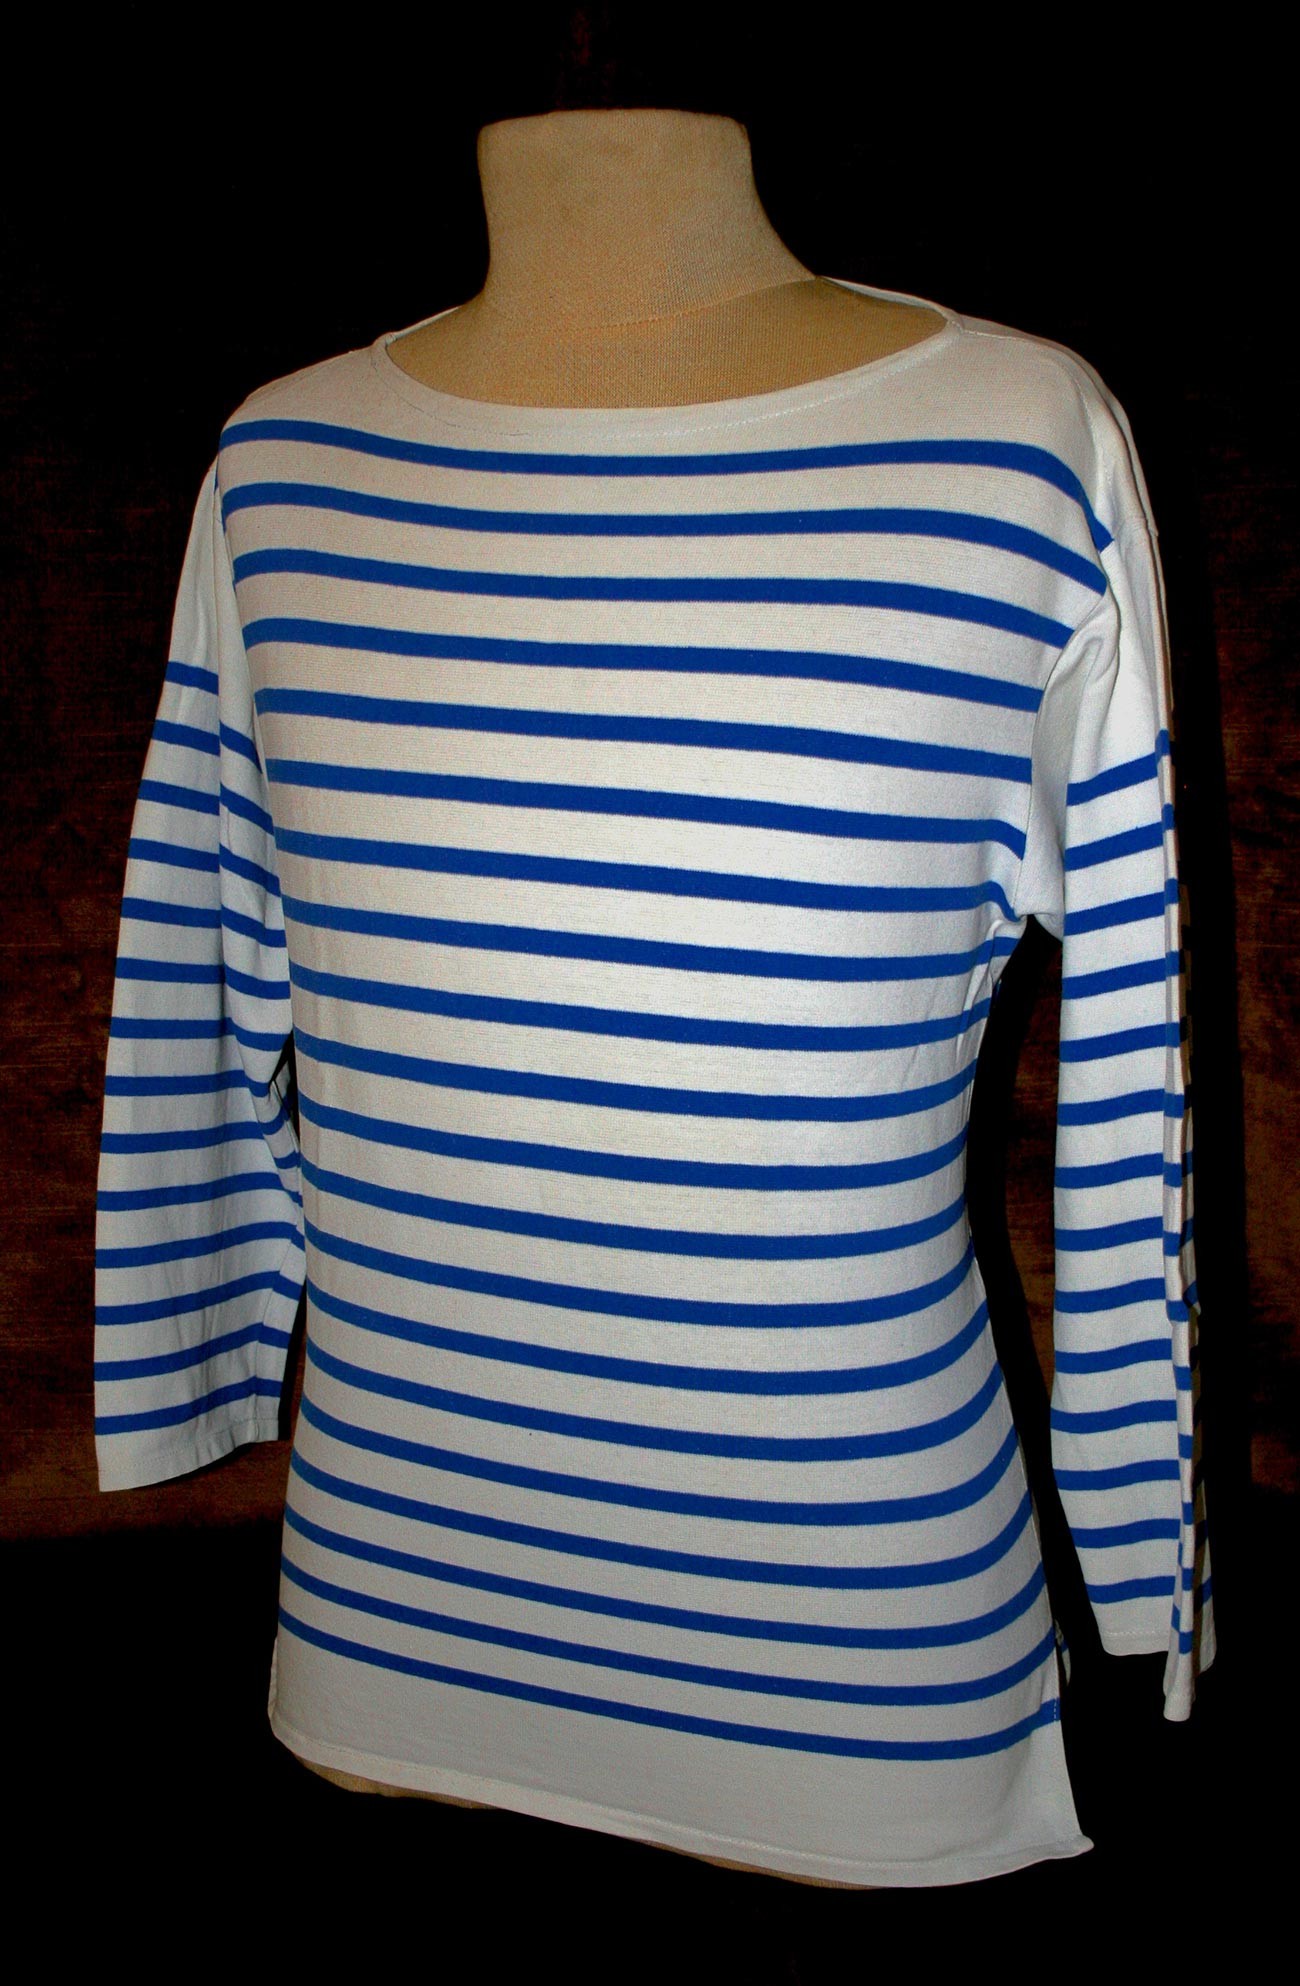 Marinière (Breton shirt) of the French Navy 